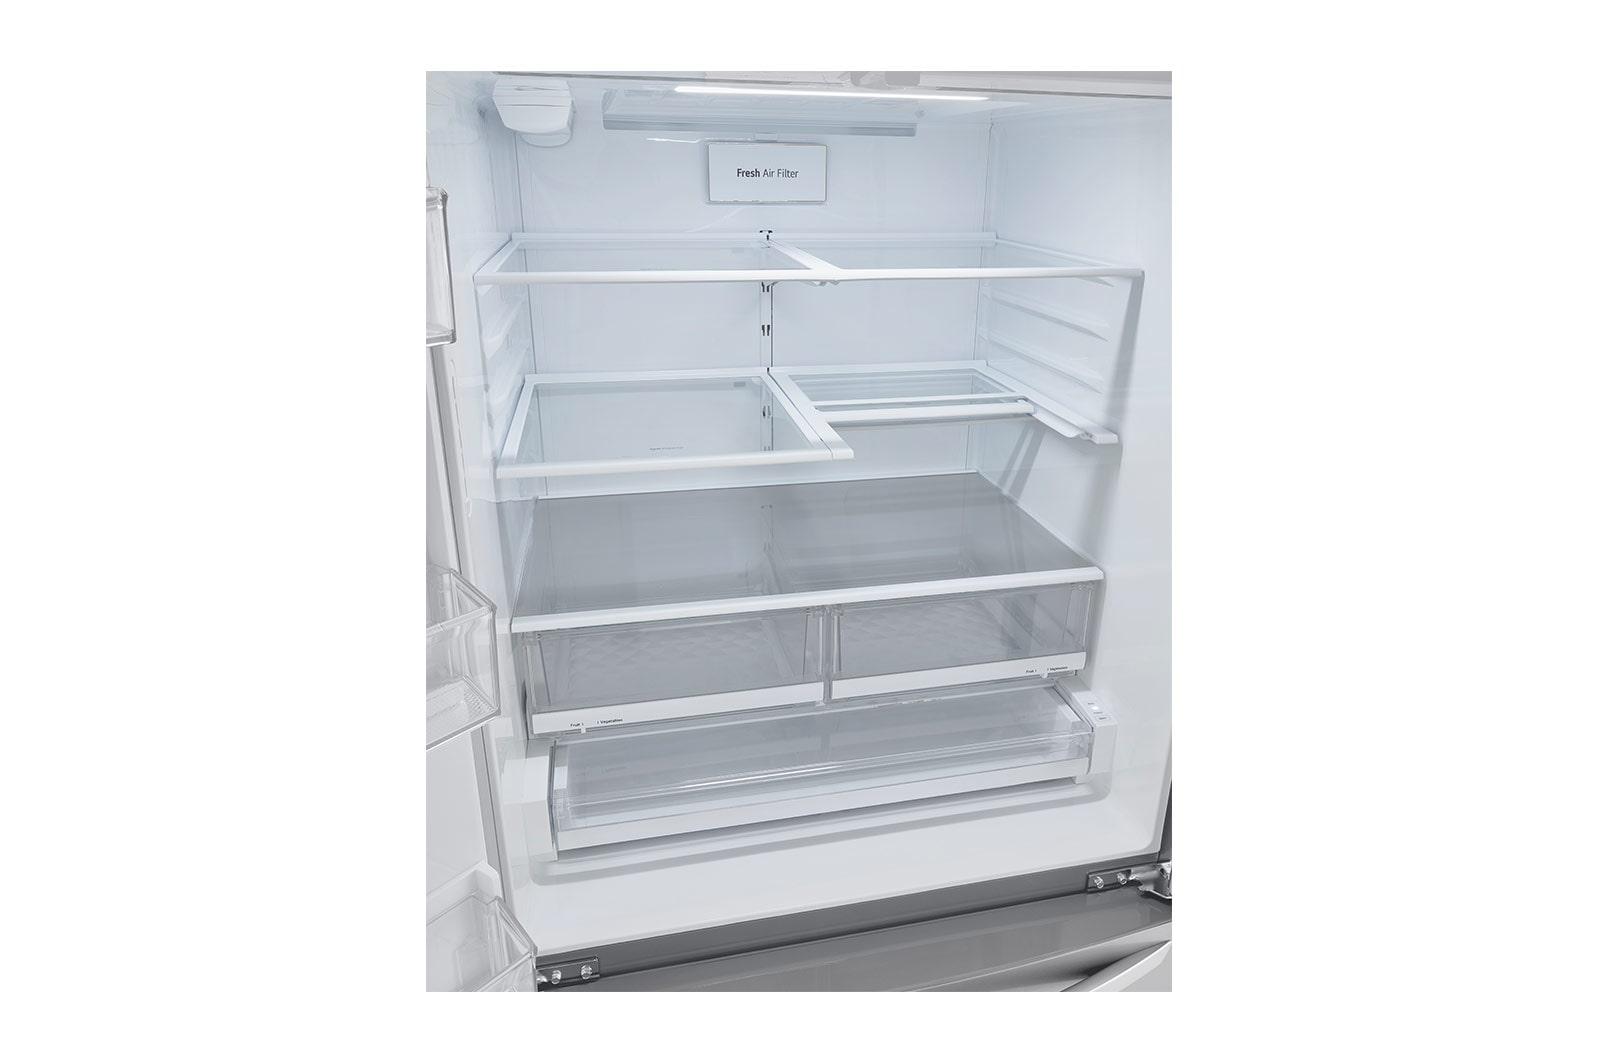 Lg 22 cu ft. Smart Counter Depth Double Freezer Refrigerator